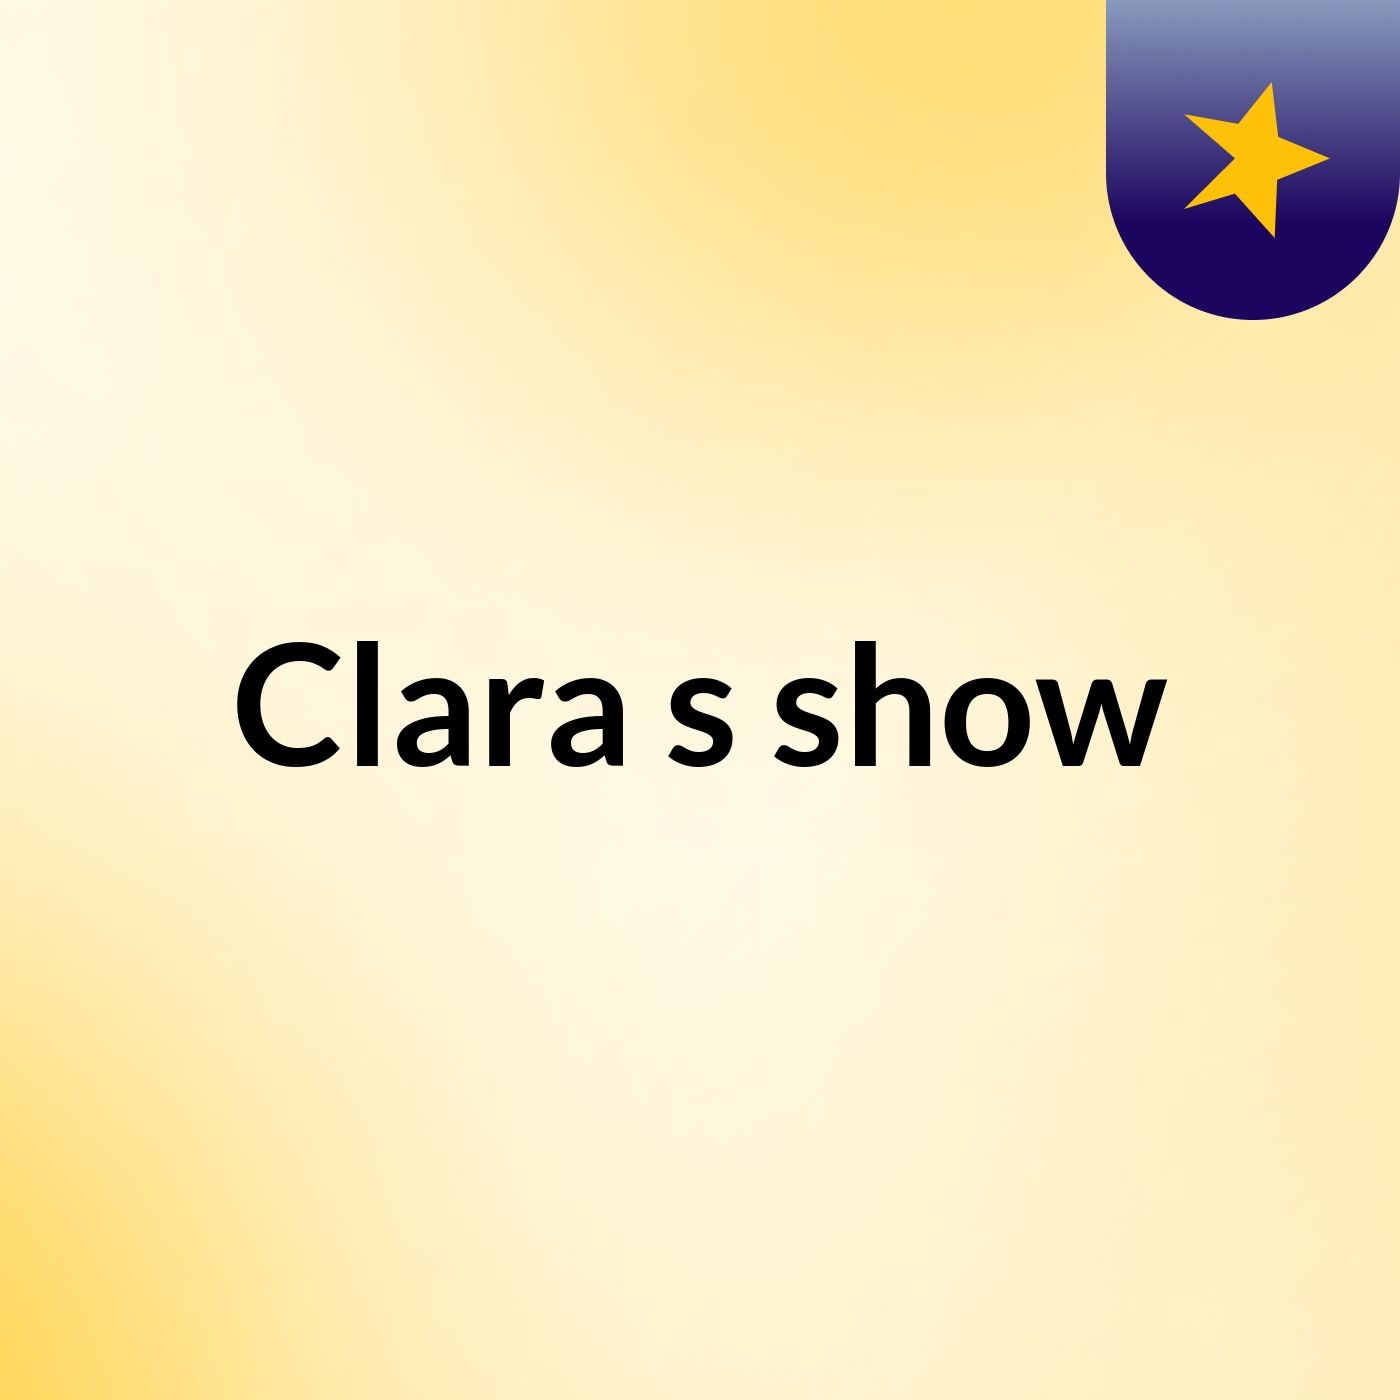 Clara's show